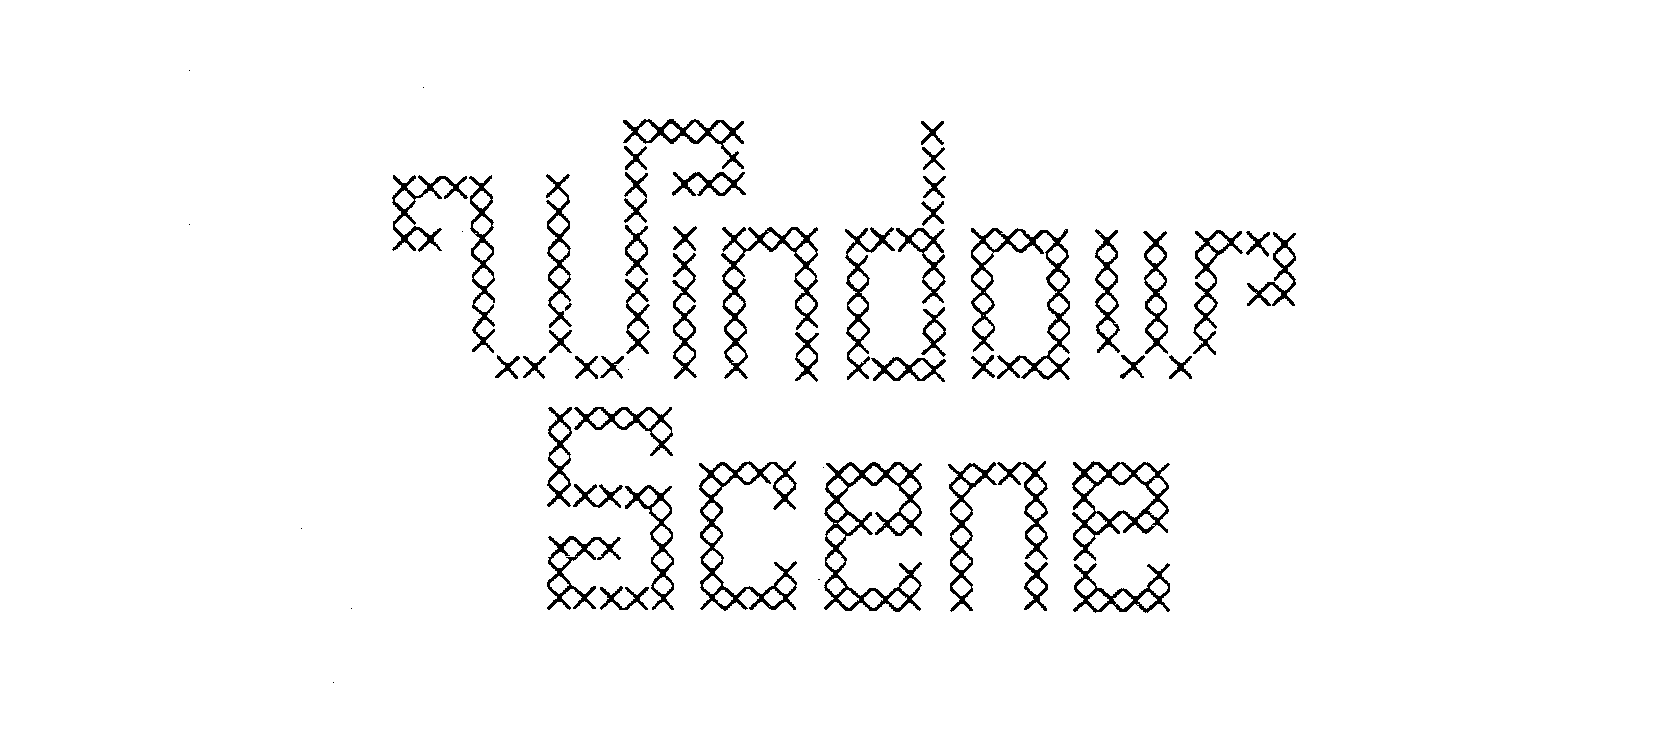  WINDOW SCENE